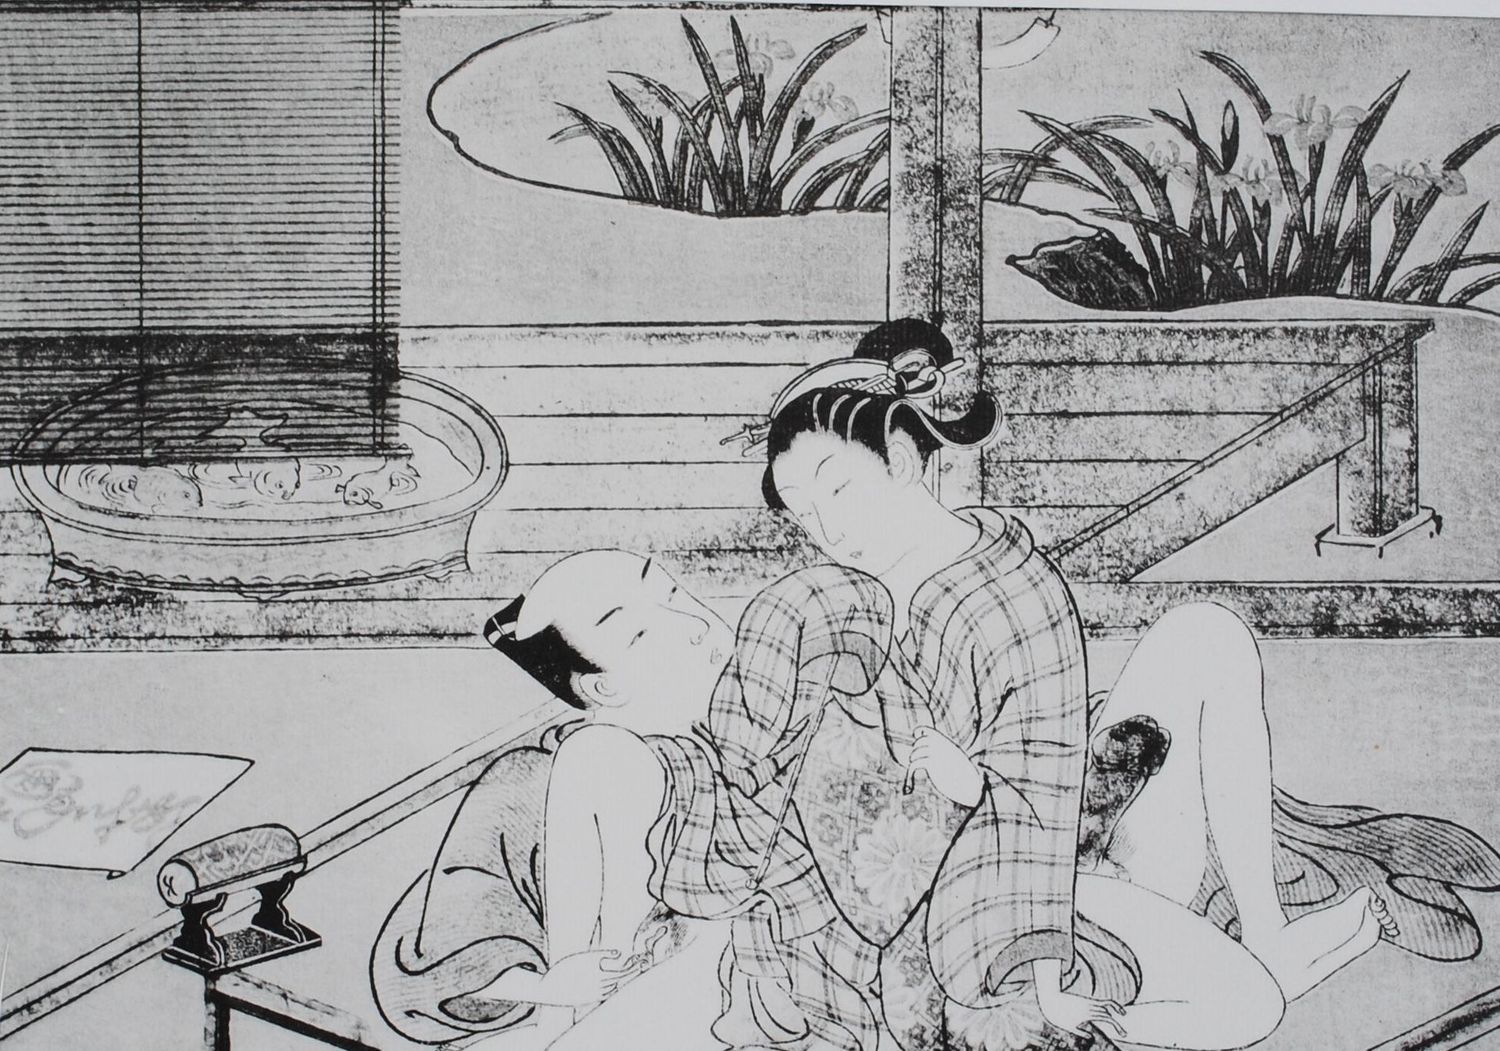 Suzuki HARUNOBU Suzuki HARUNOBU (d'après) (1725-1770)
Les deux amants

Lithograp&hellip;